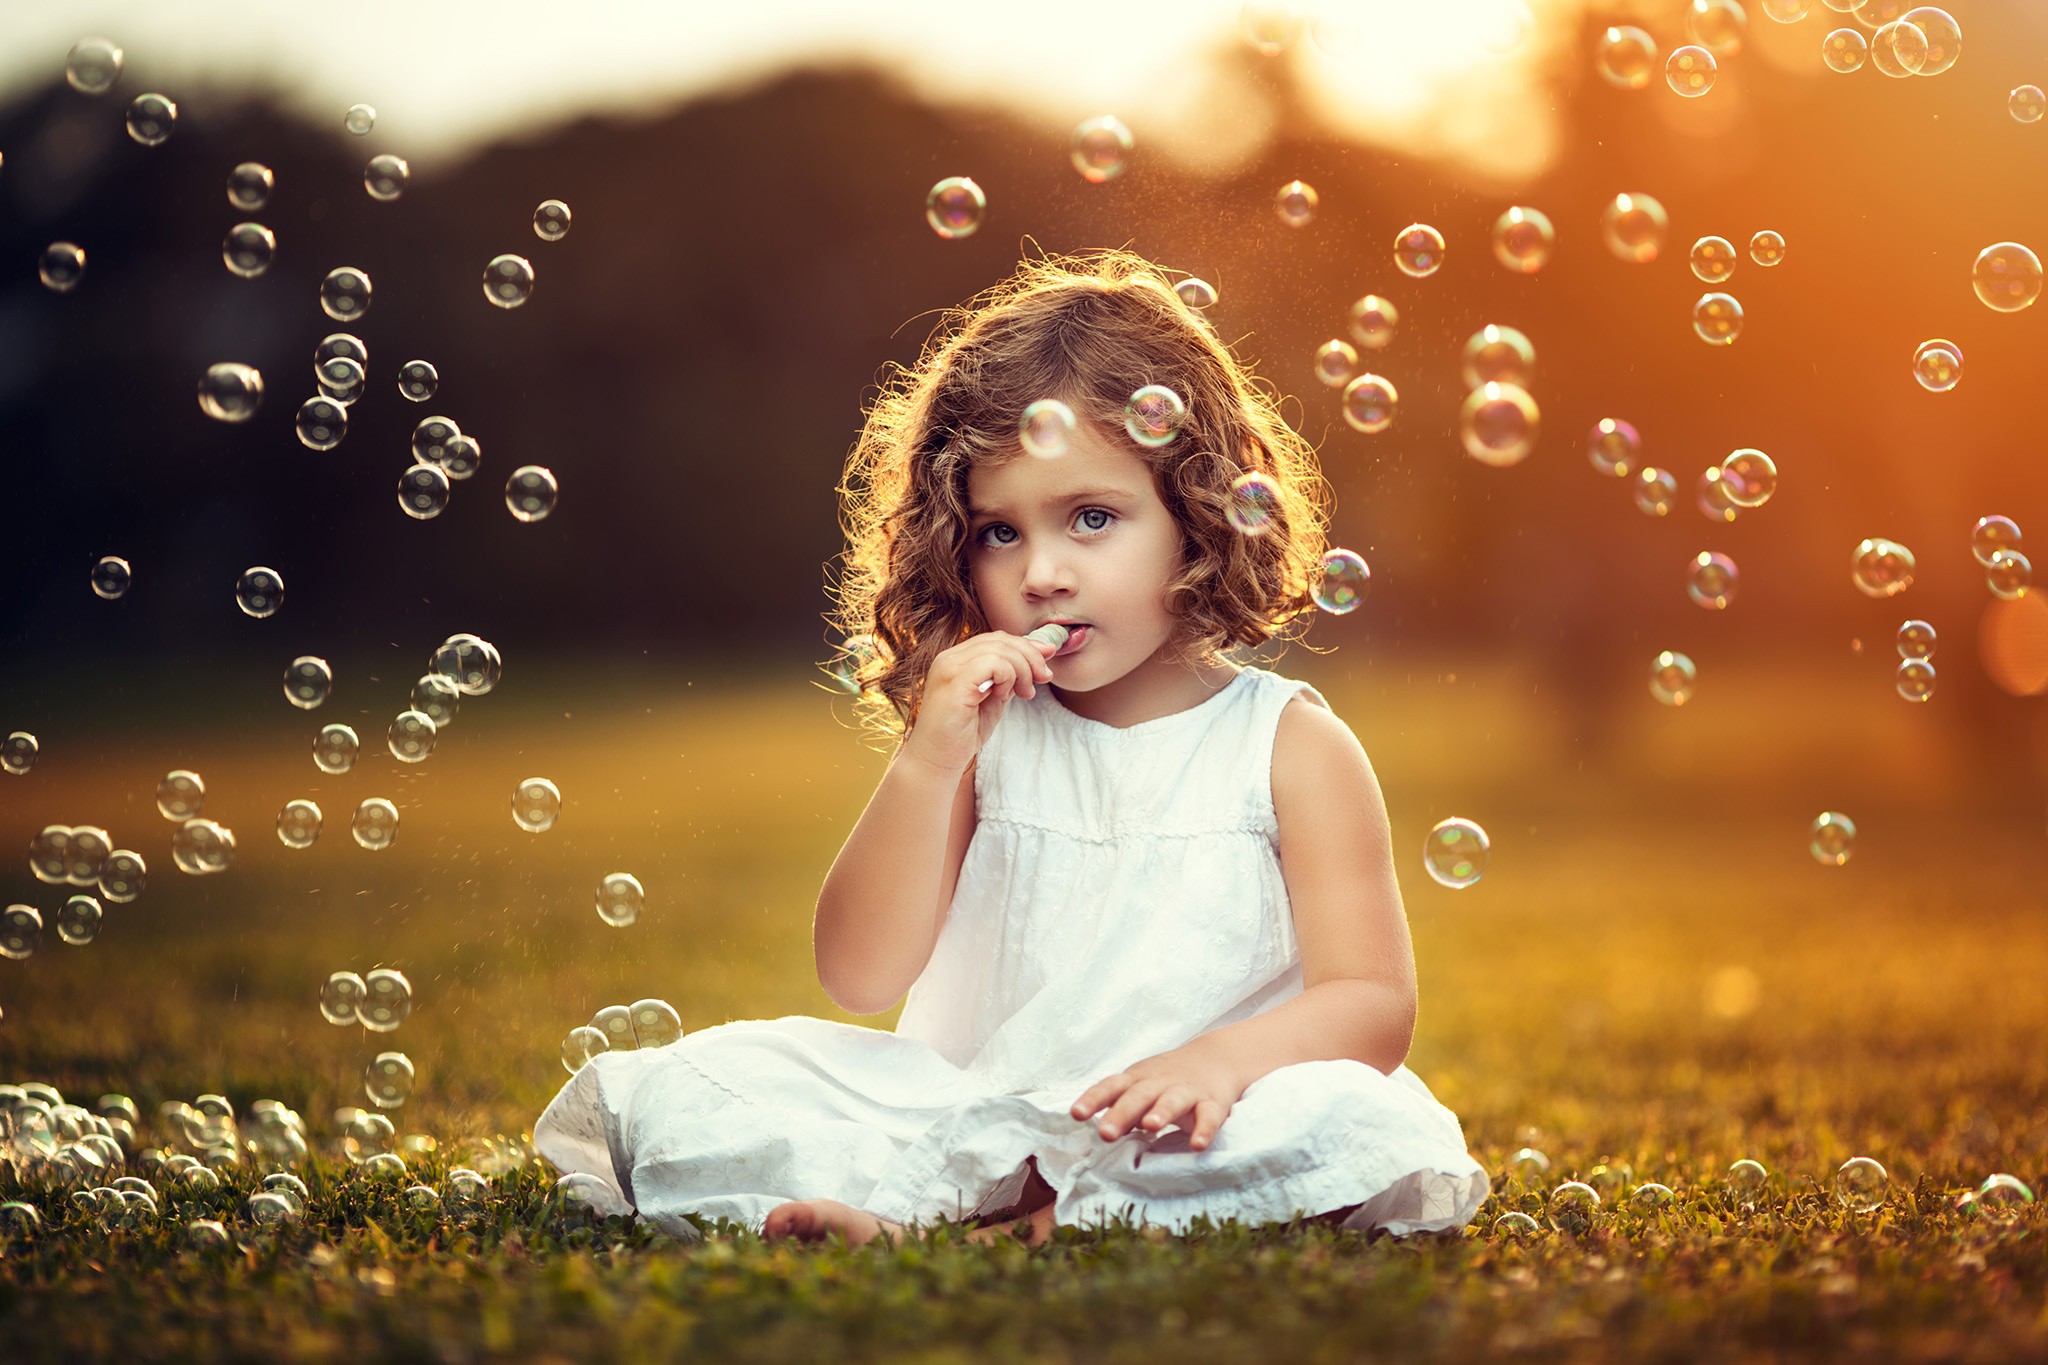 A little girl in a white dress blowing soap bubbles